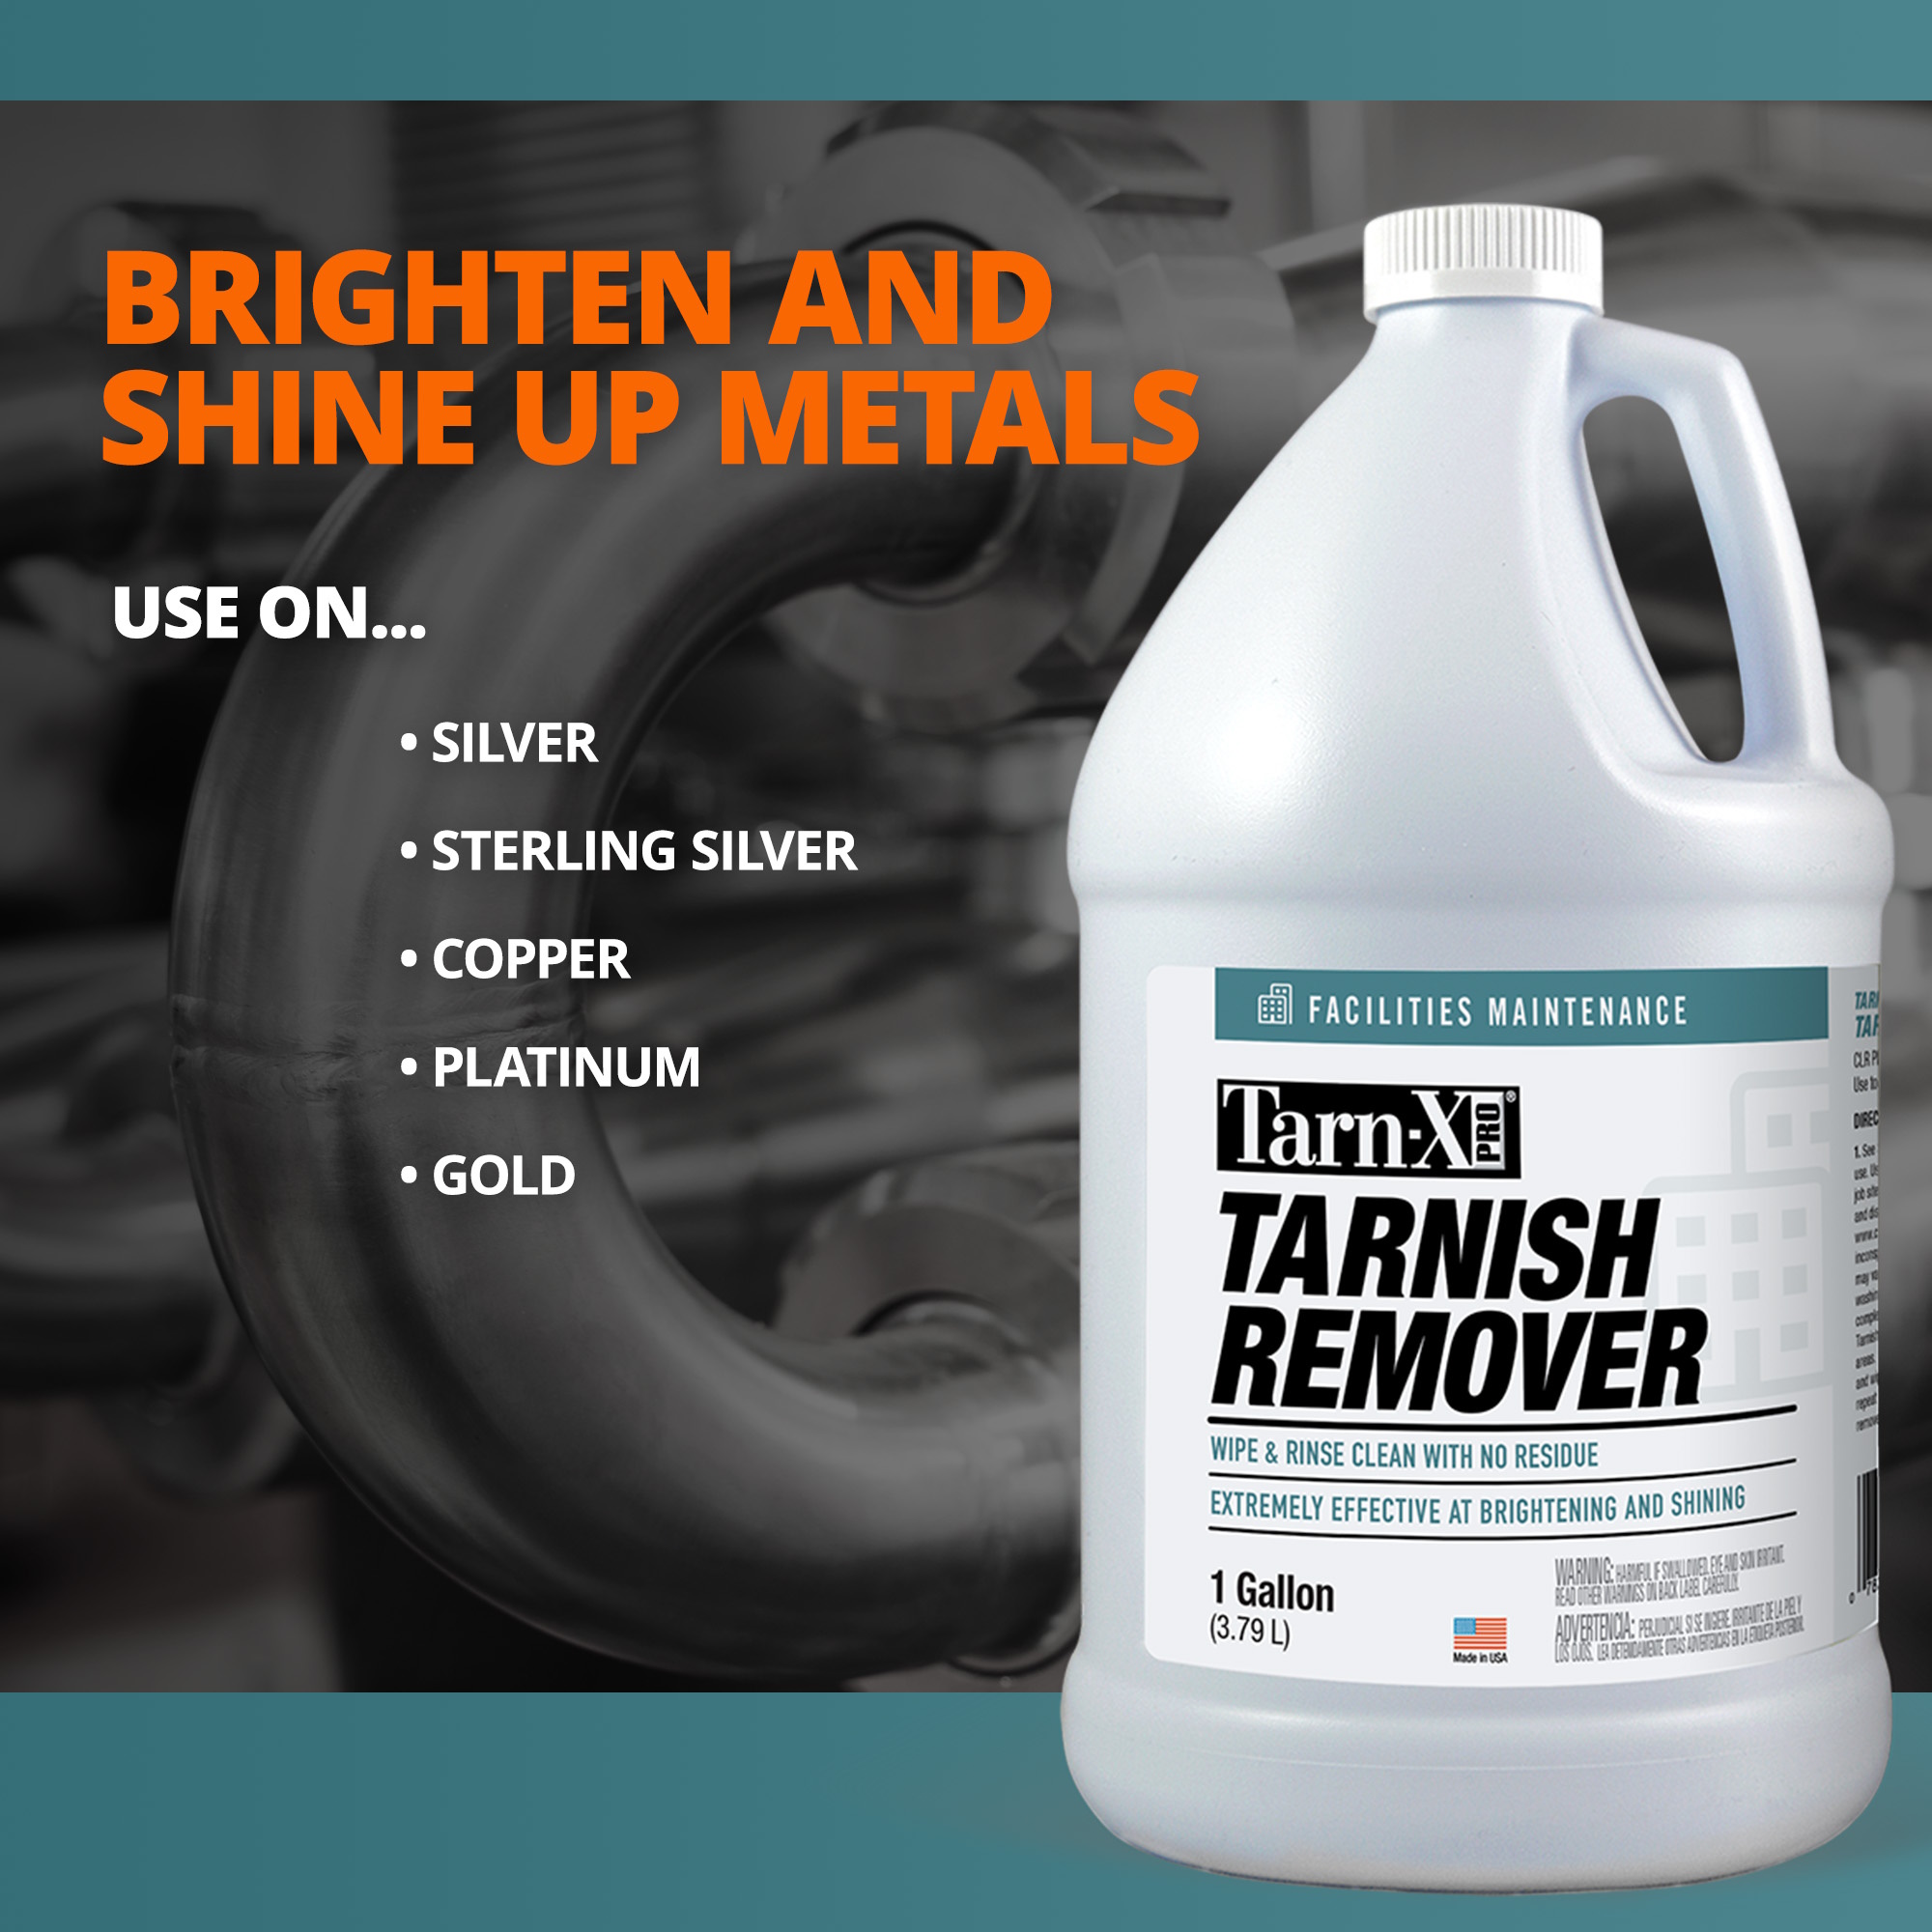 Tarn-x Tarnish Remover Provides Time-Saving Shine 